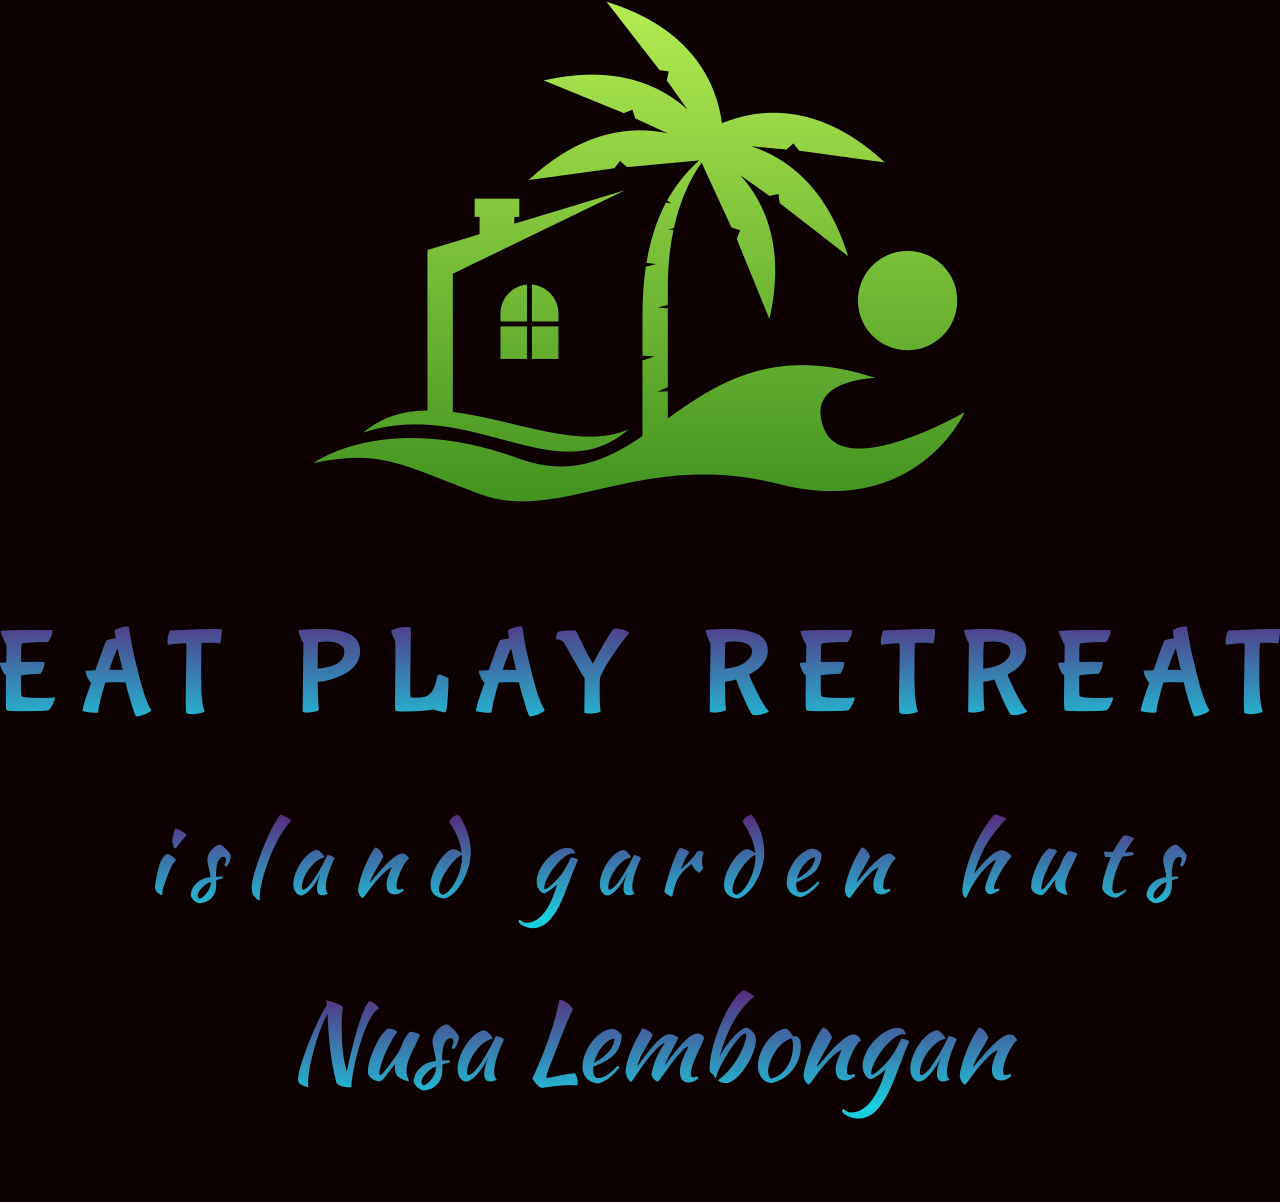 Eat Play Retreat 's logo